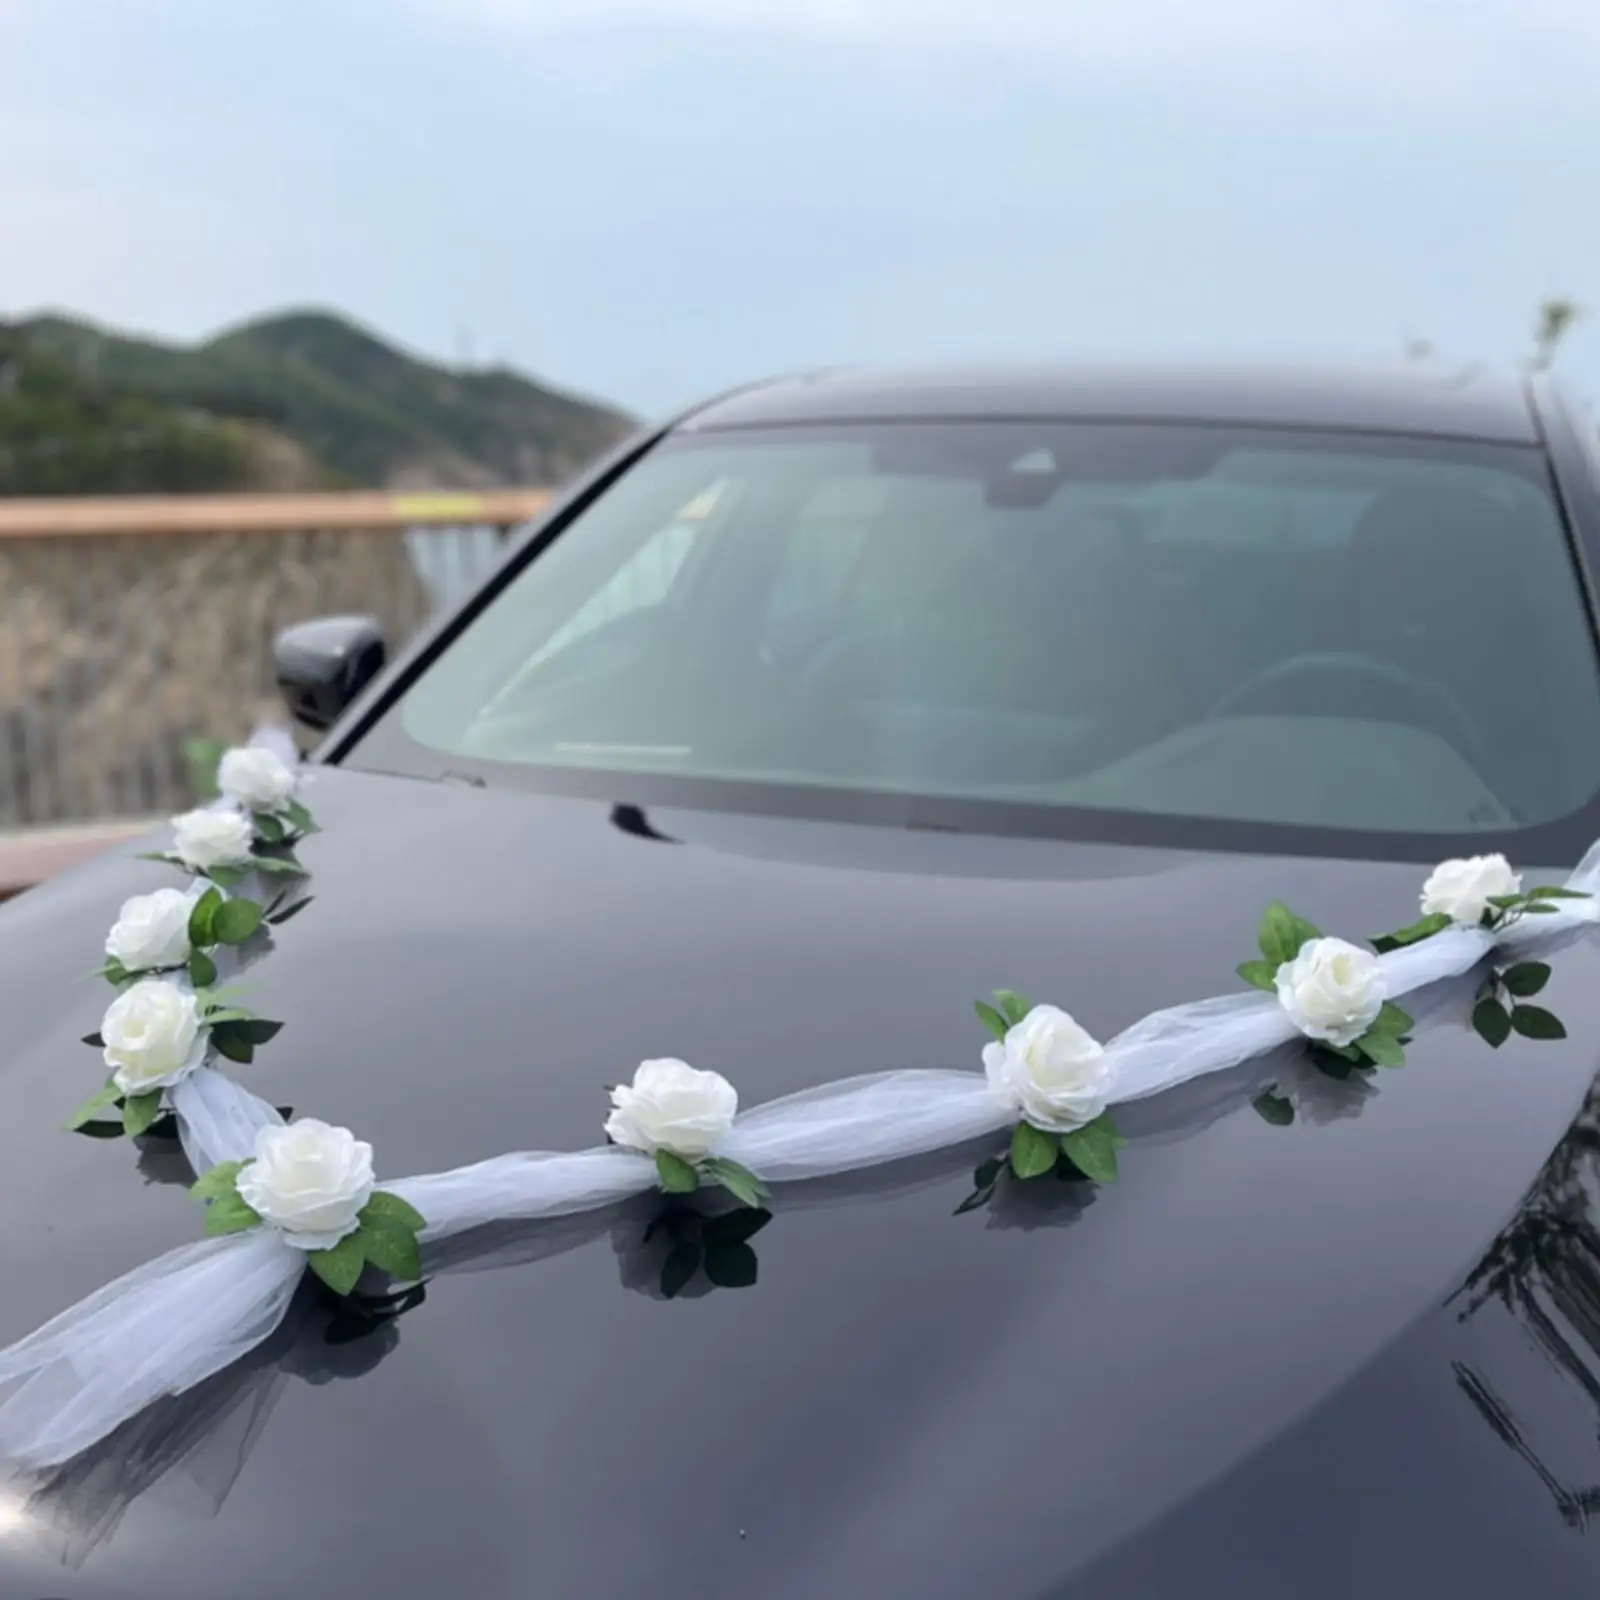 Luxury DIY Wedding Car Ribbon Rose Flower Car Decoration Silk Tulle 9 Head Flower for Party Limousine Events Decoration Ornament